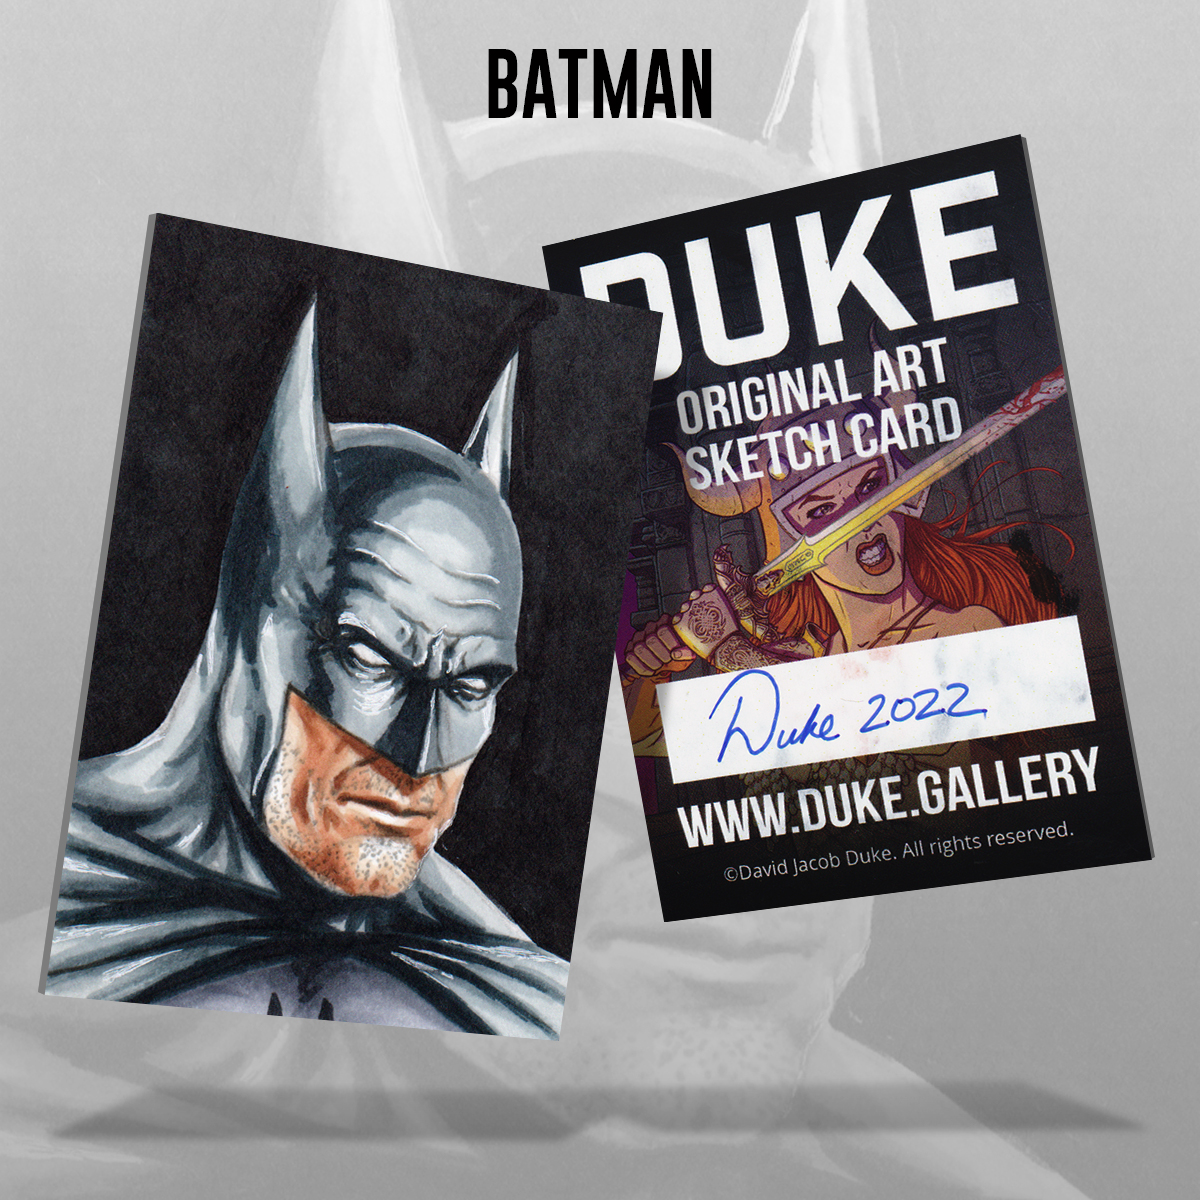 Batman Sketch Card by Duke